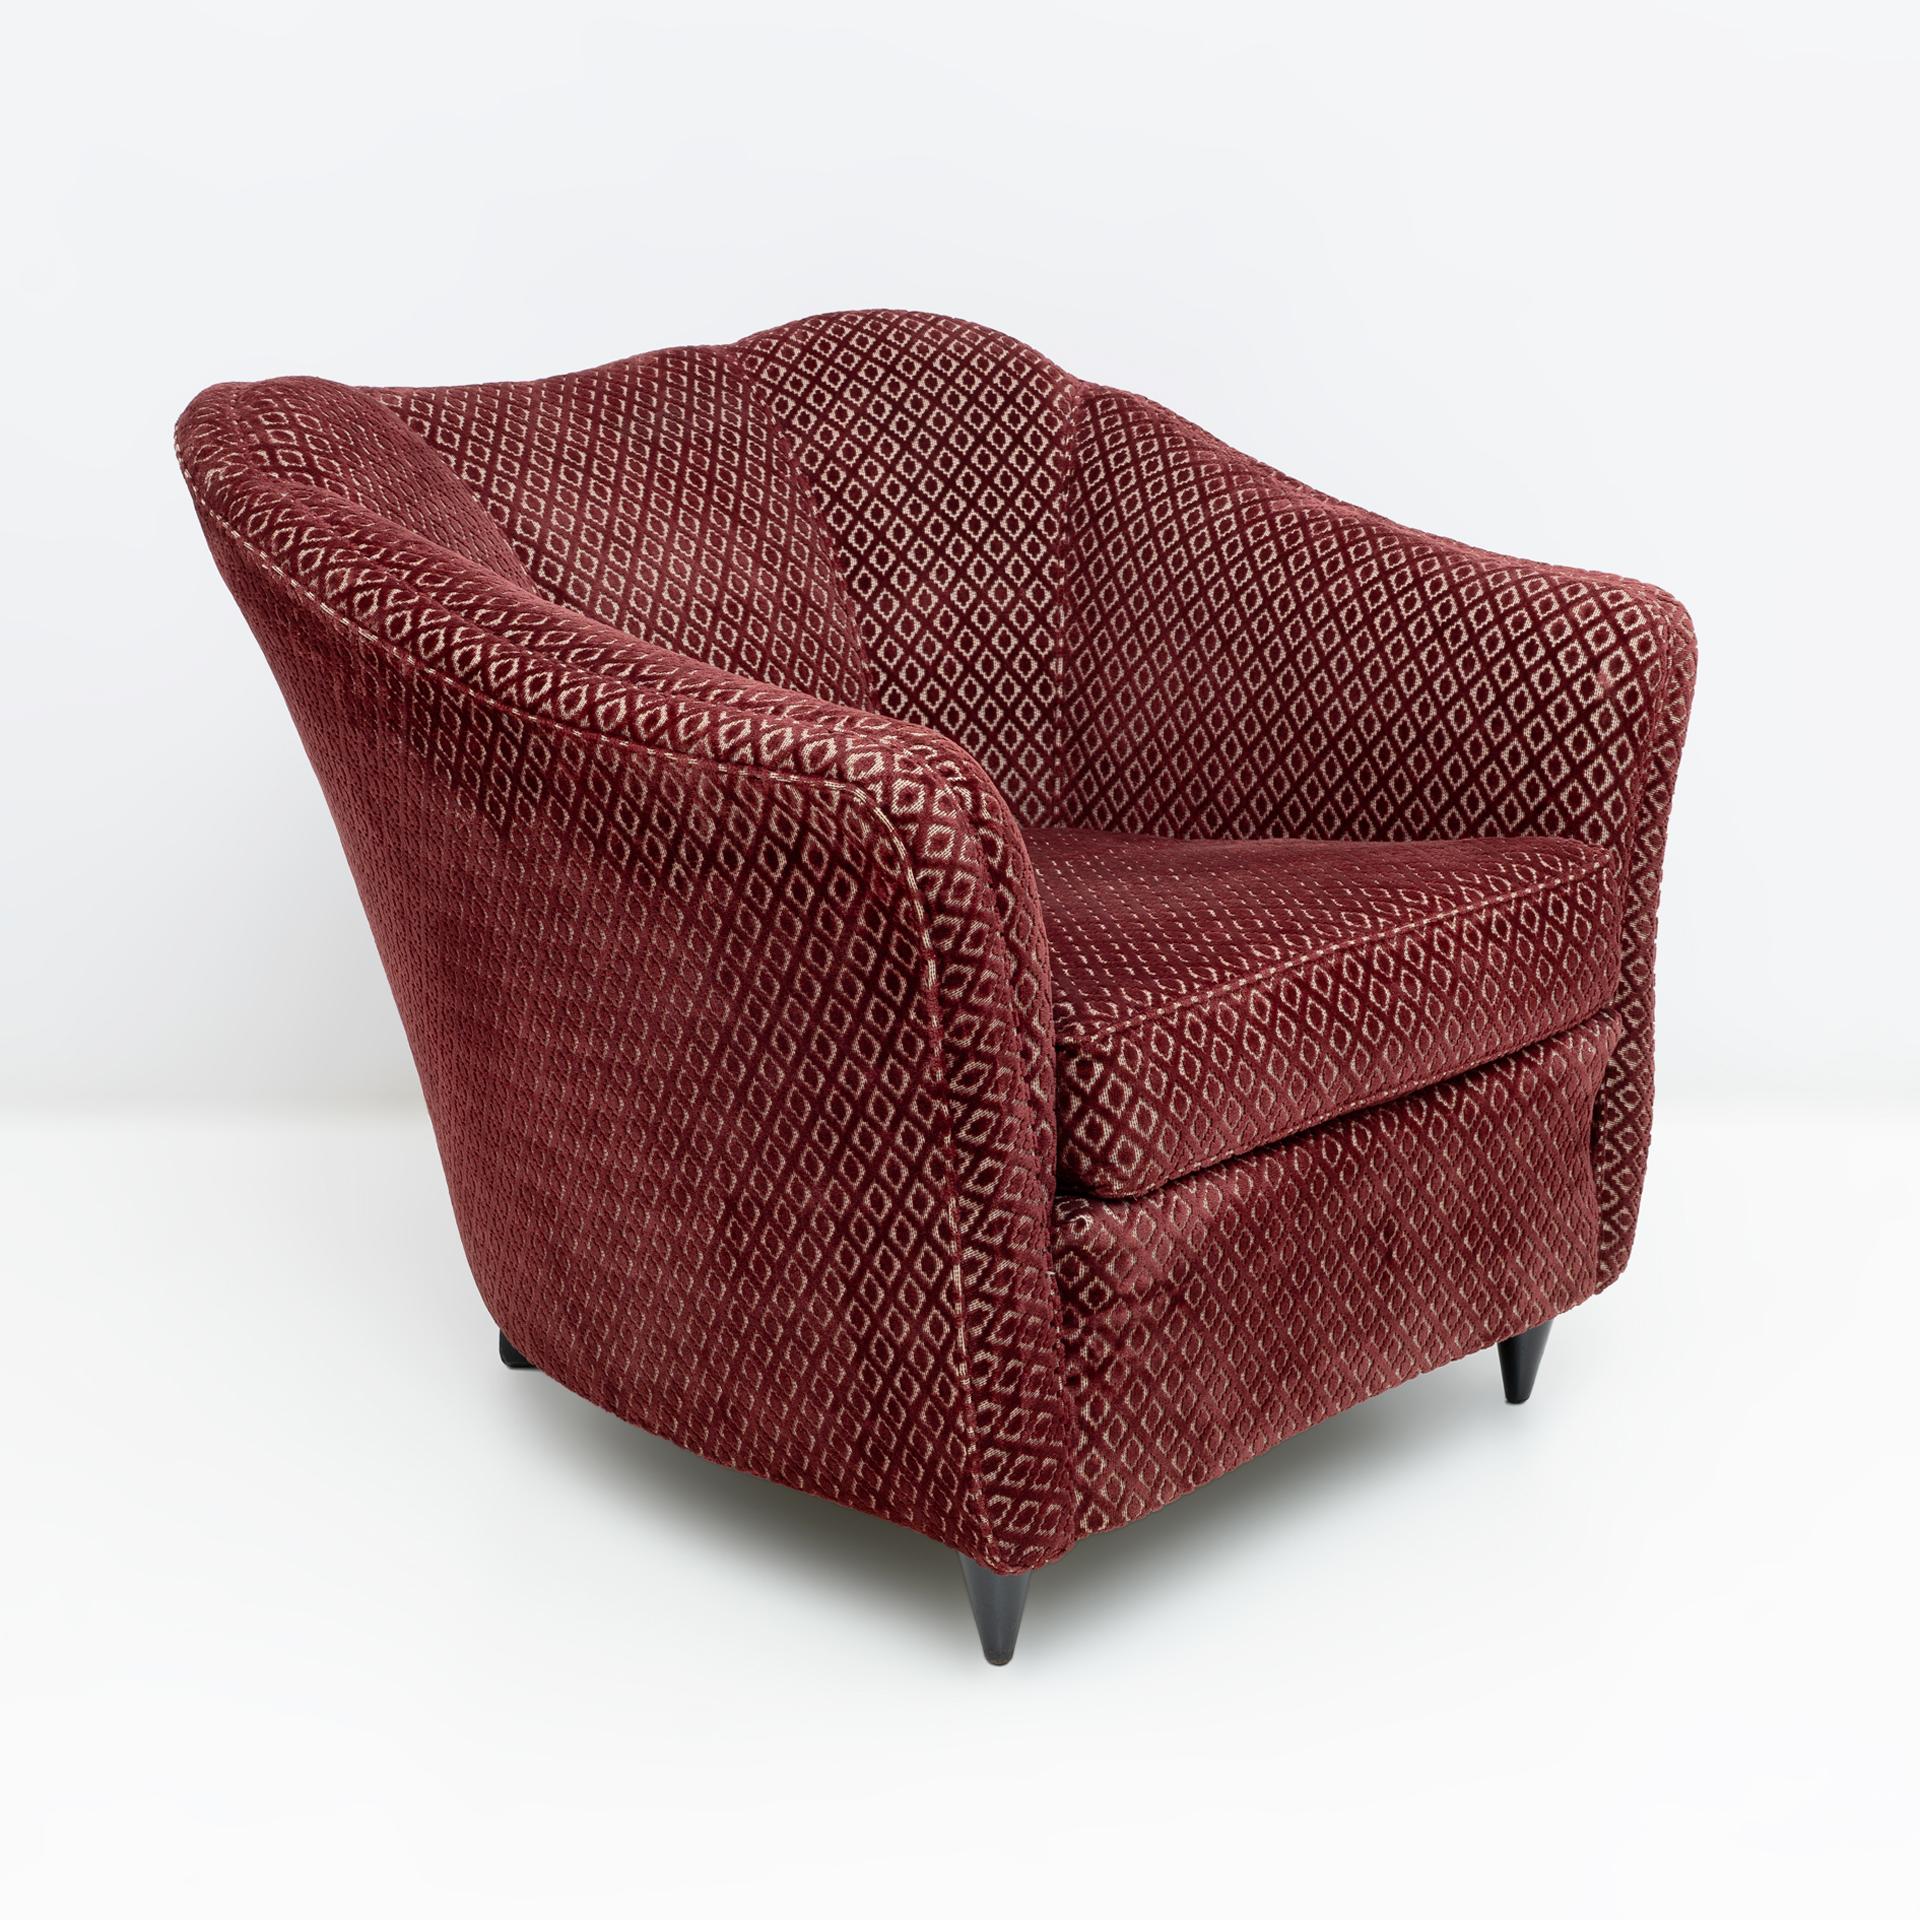 Pair of Gio Ponti Mid-Century Modern Velvet Armchairs for Casa e Giardino, 1950s For Sale 8